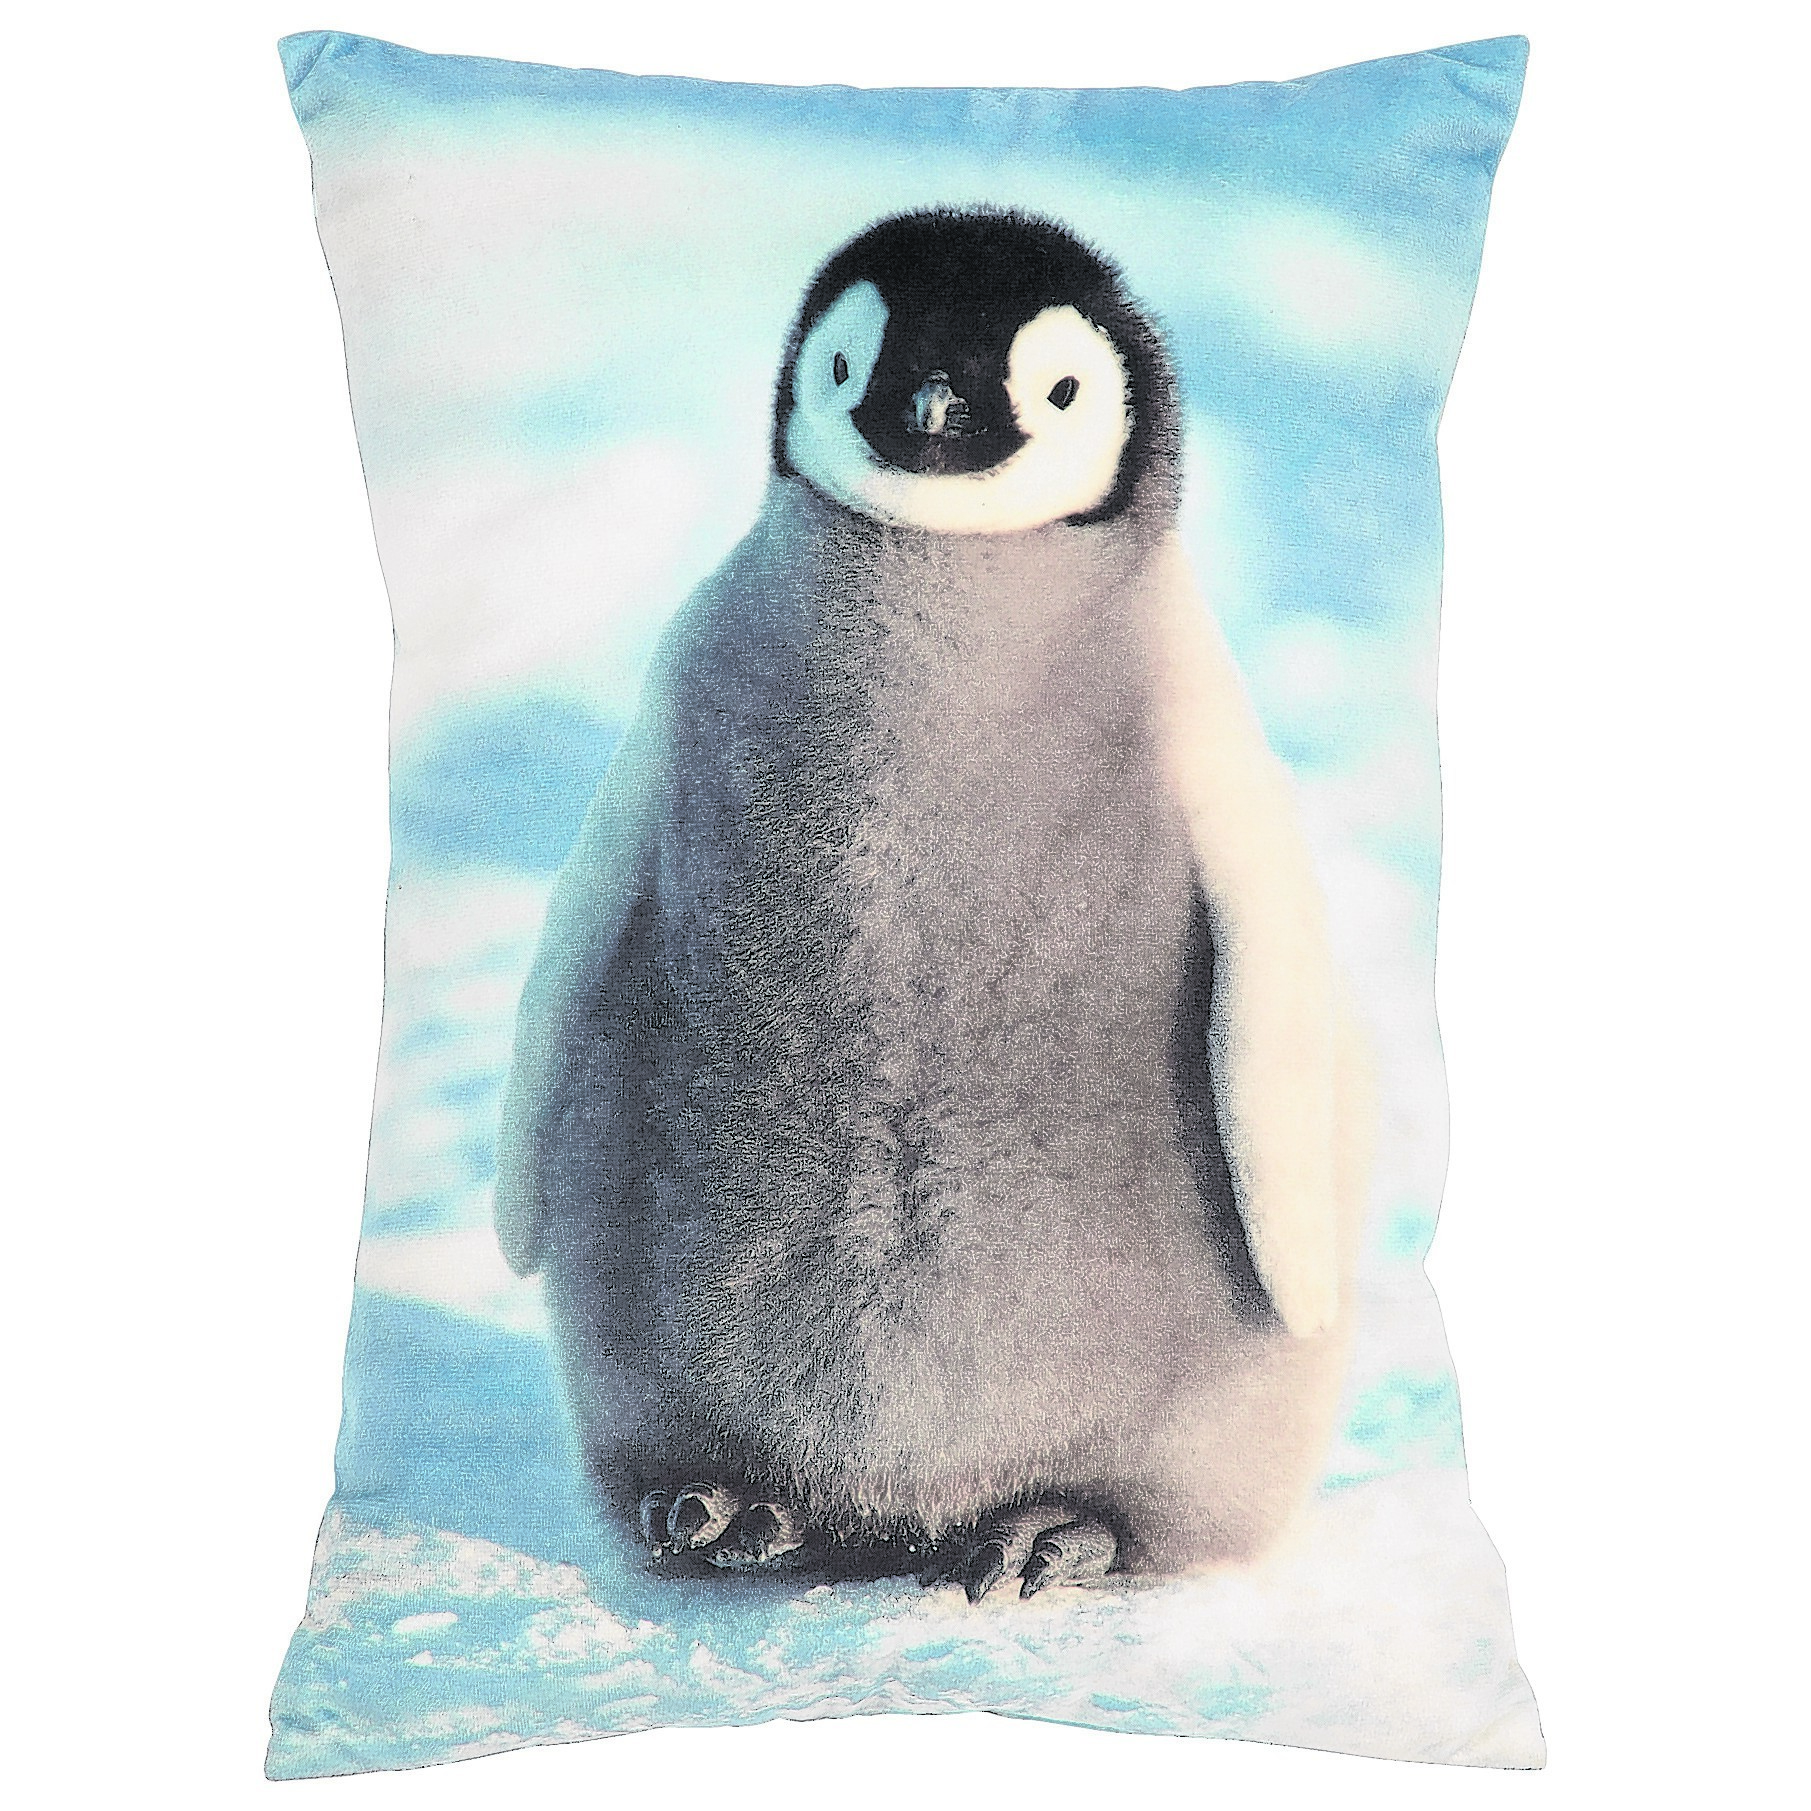 yh-1612-cushions-penguin